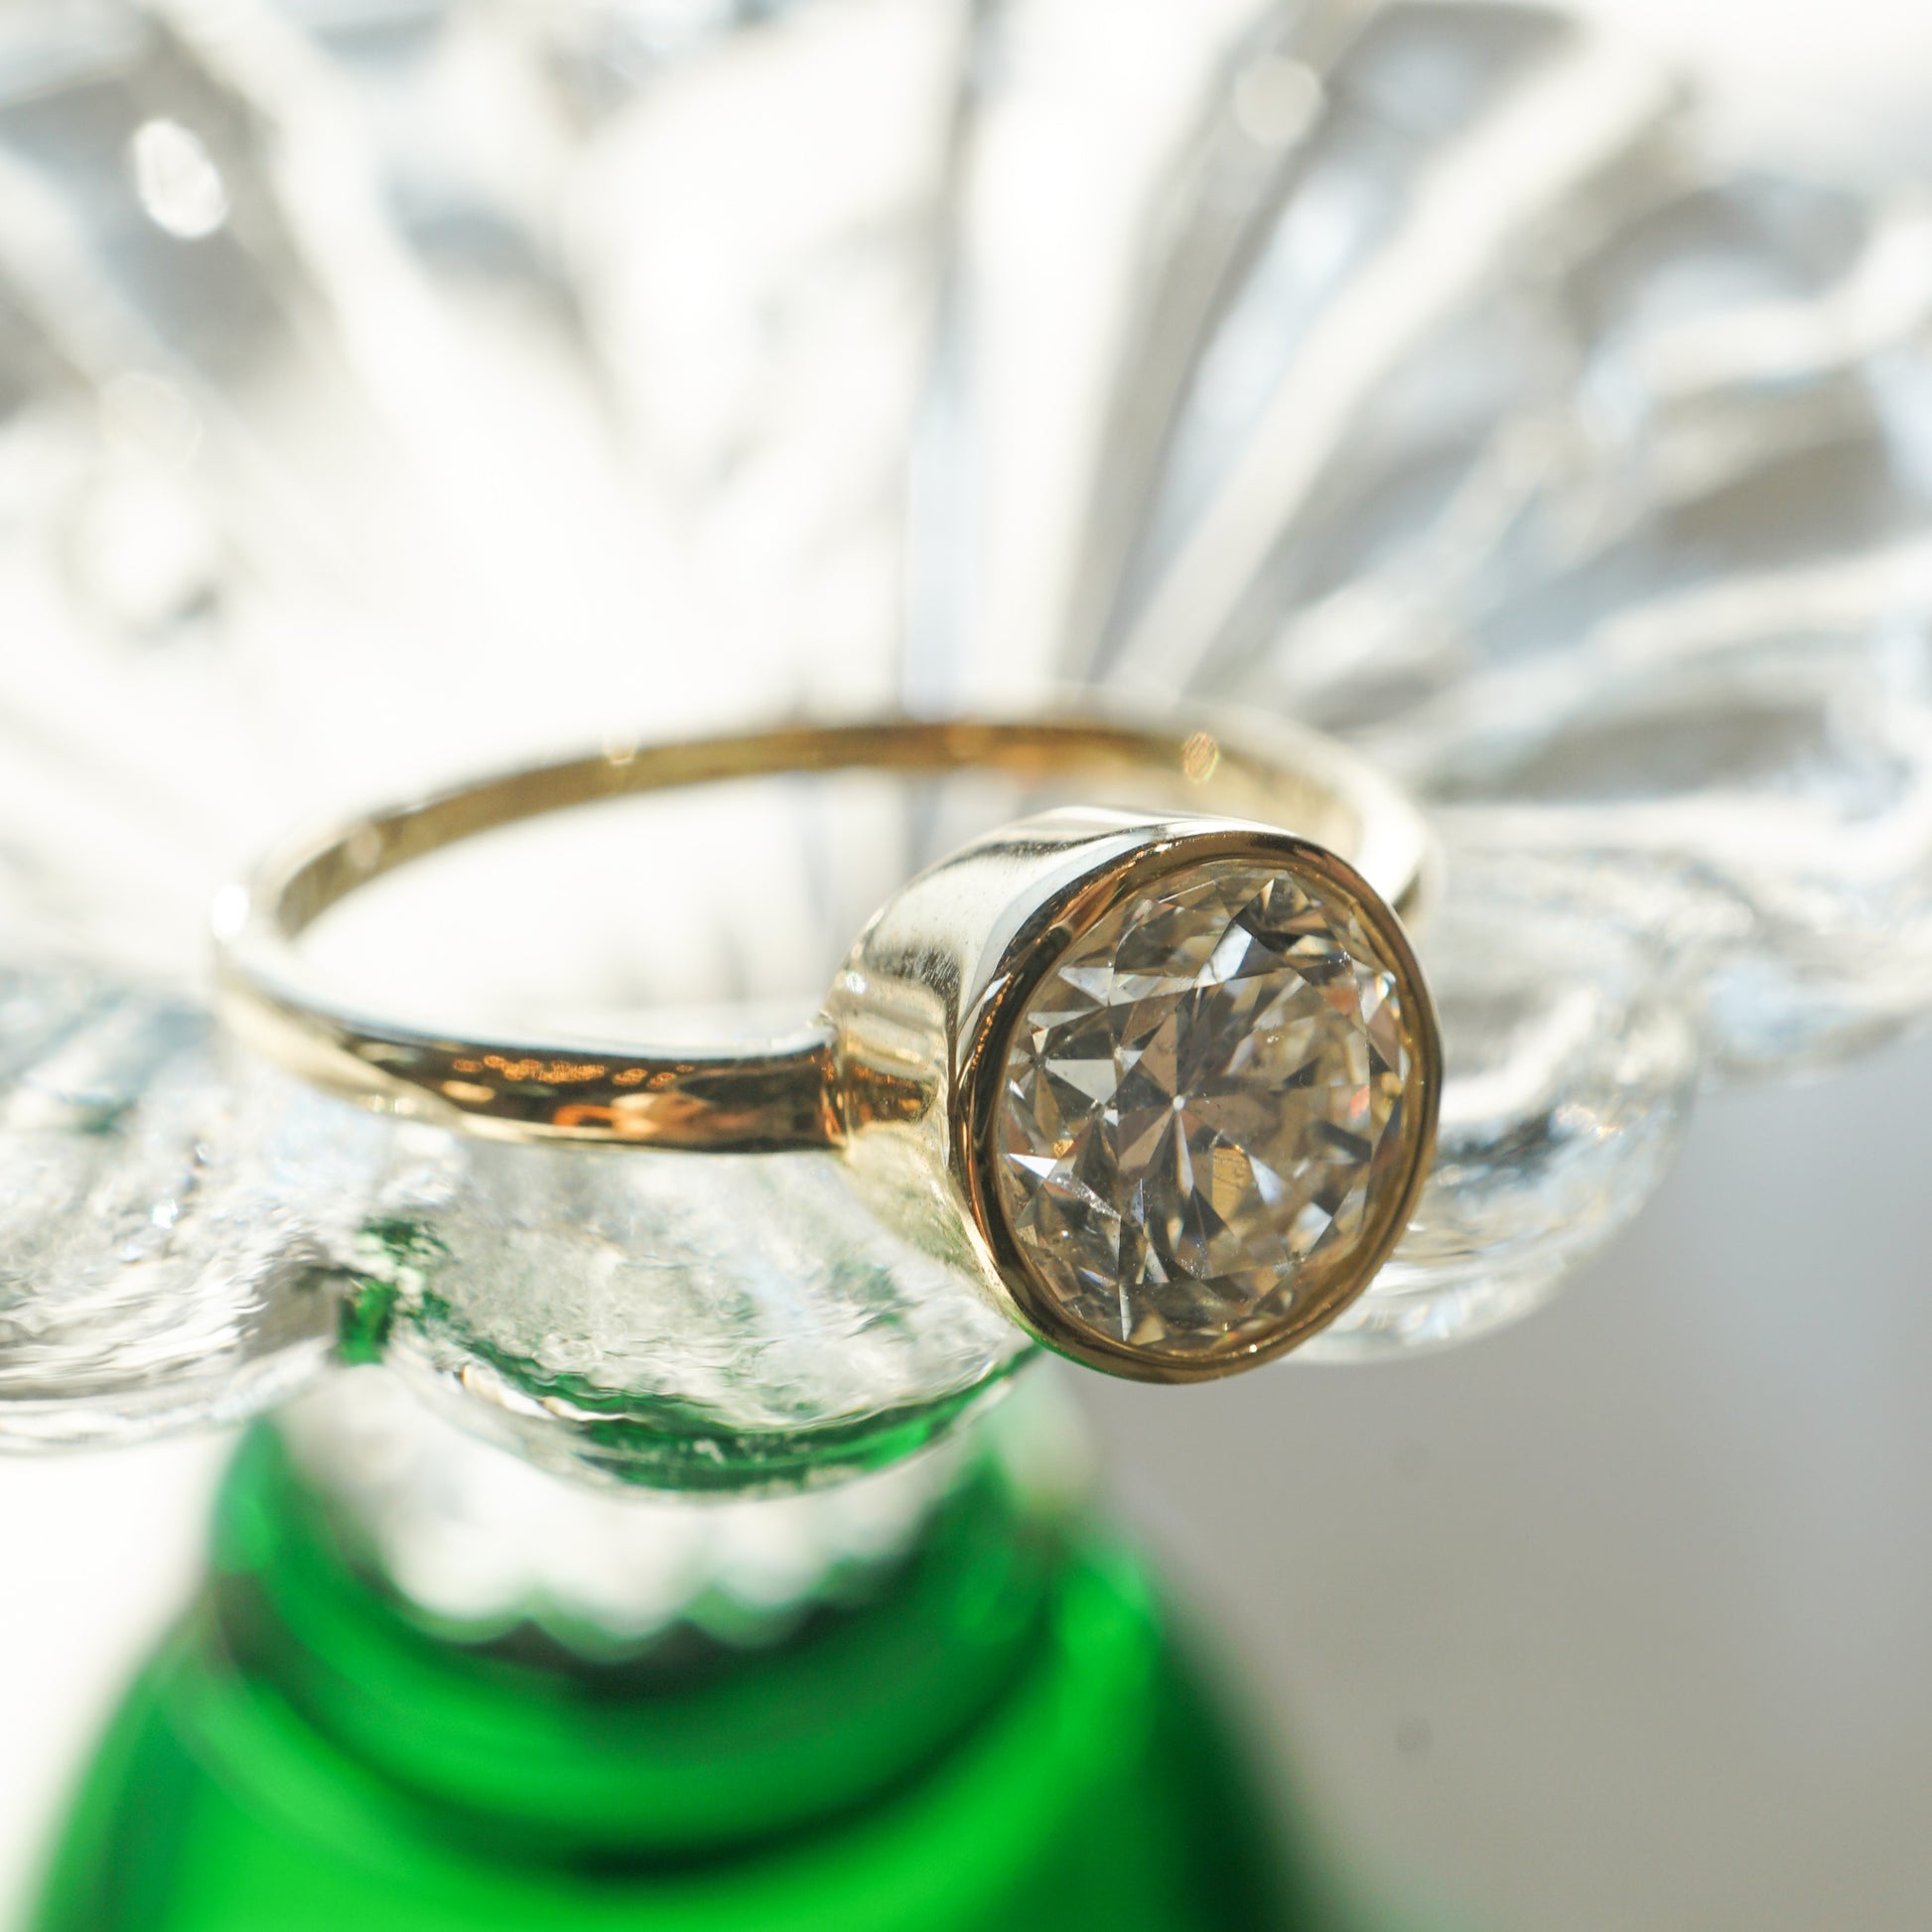 1.23 Bezel Set Diamond Engagement Ring in 14k Yellow GoldComposition: 14 Karat Yellow Gold Ring Size: 6.5 Total Diamond Weight: 1.23ct Total Gram Weight: 1.93 g Inscription: 14k
      